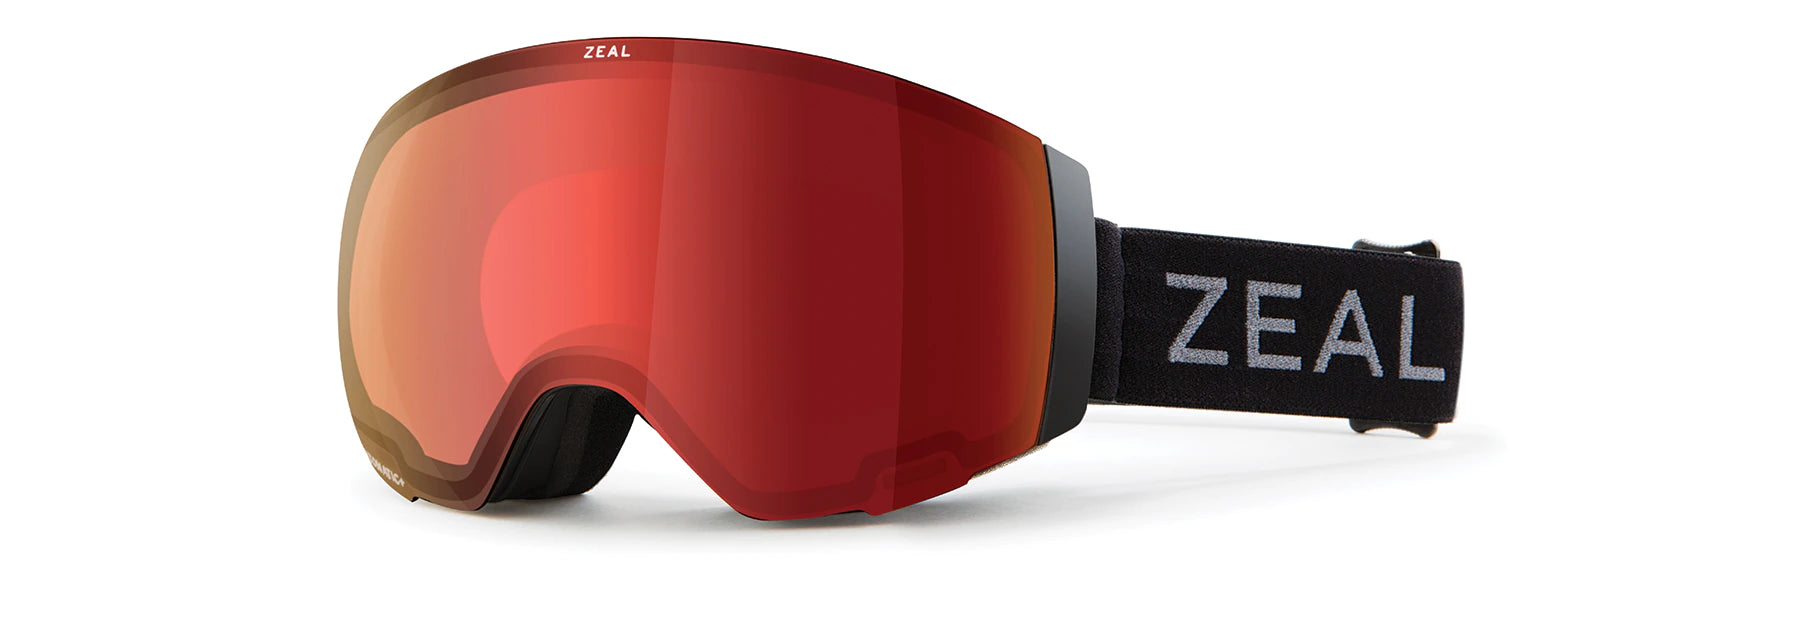 Zeal- Portal RLS Ski & Snowboard Goggles w/ Bonus Lens